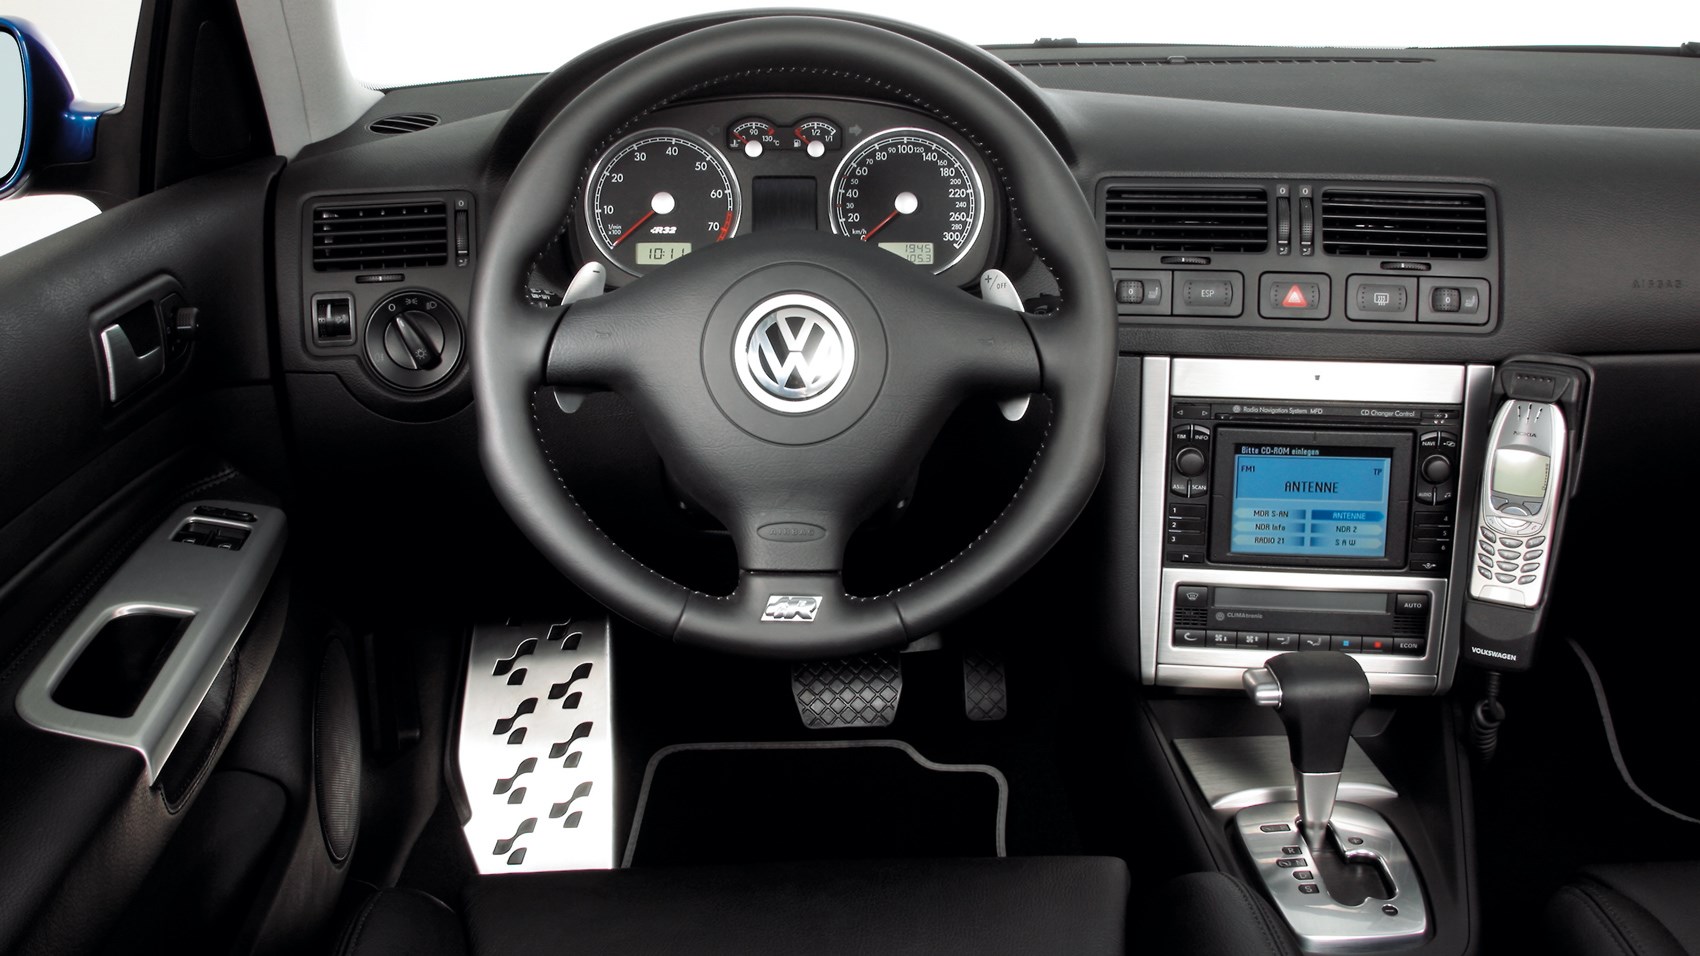 Driving the classics: Volkswagen Golf Mk4 (2002) review | CAR Magazine